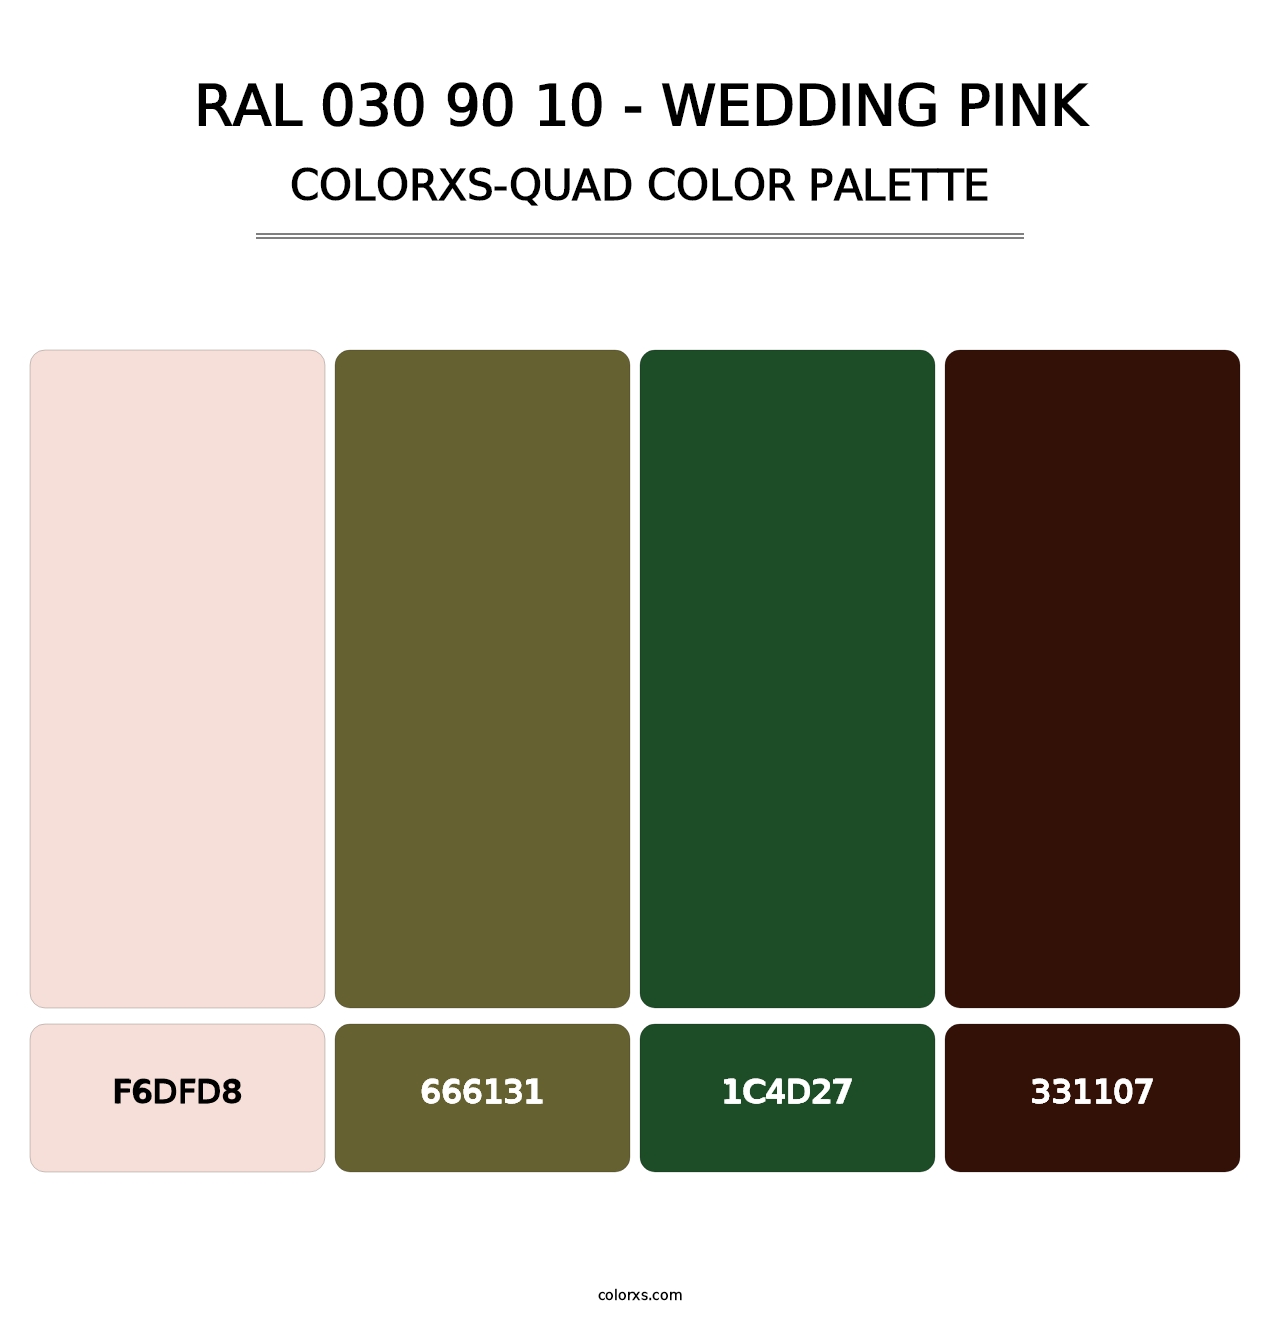 RAL 030 90 10 - Wedding Pink - Colorxs Quad Palette